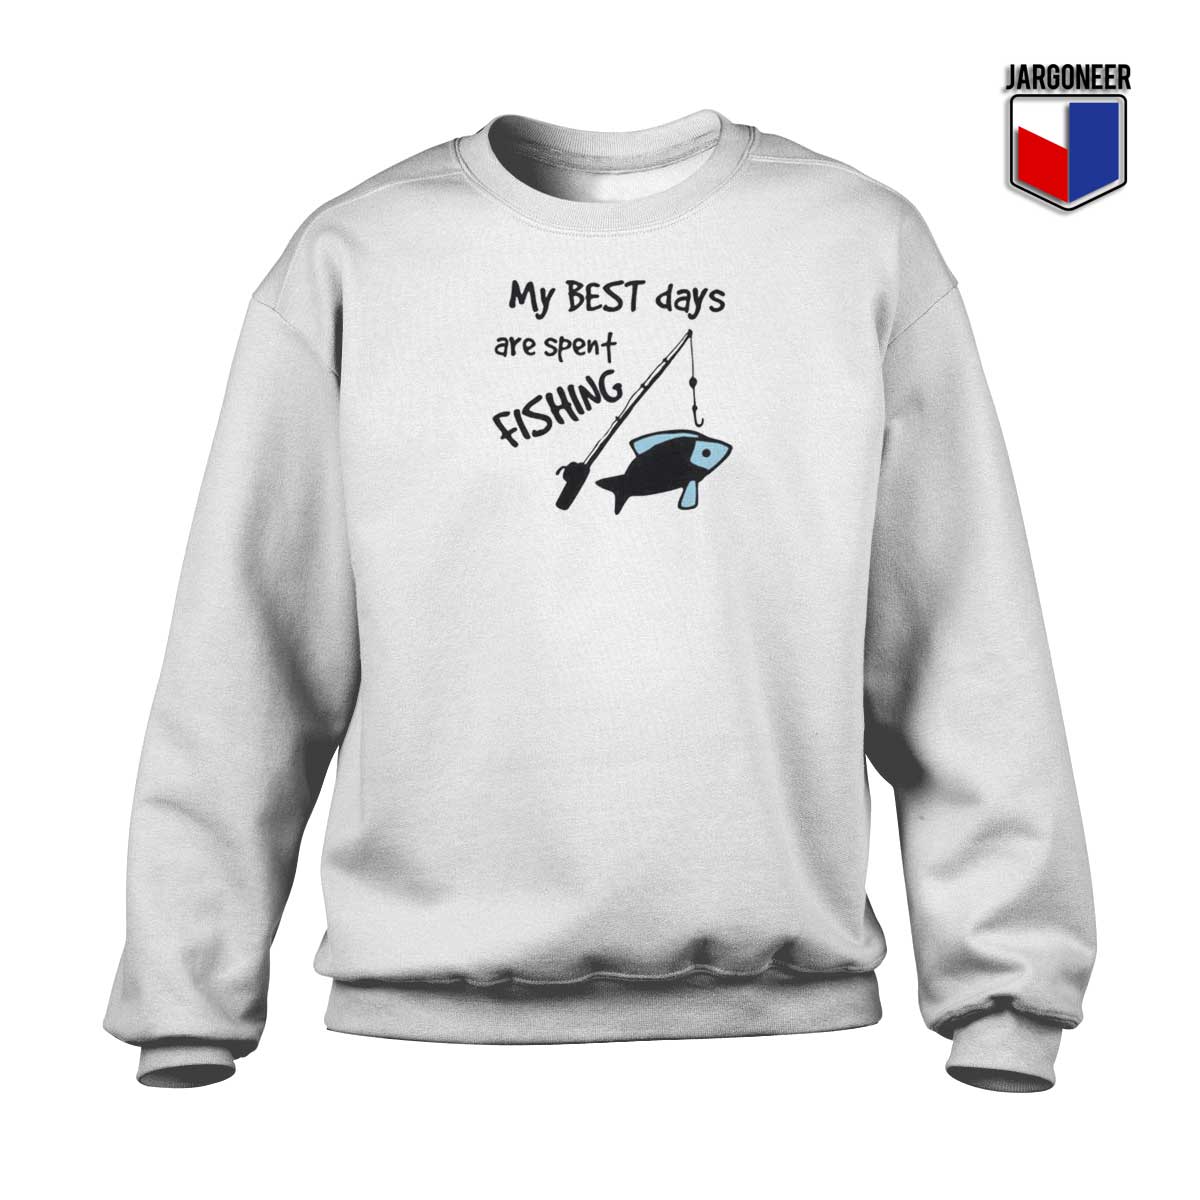 Best Days Spent Fishing Sweatshirt - Shop Unique Graphic Cool Shirt Designs